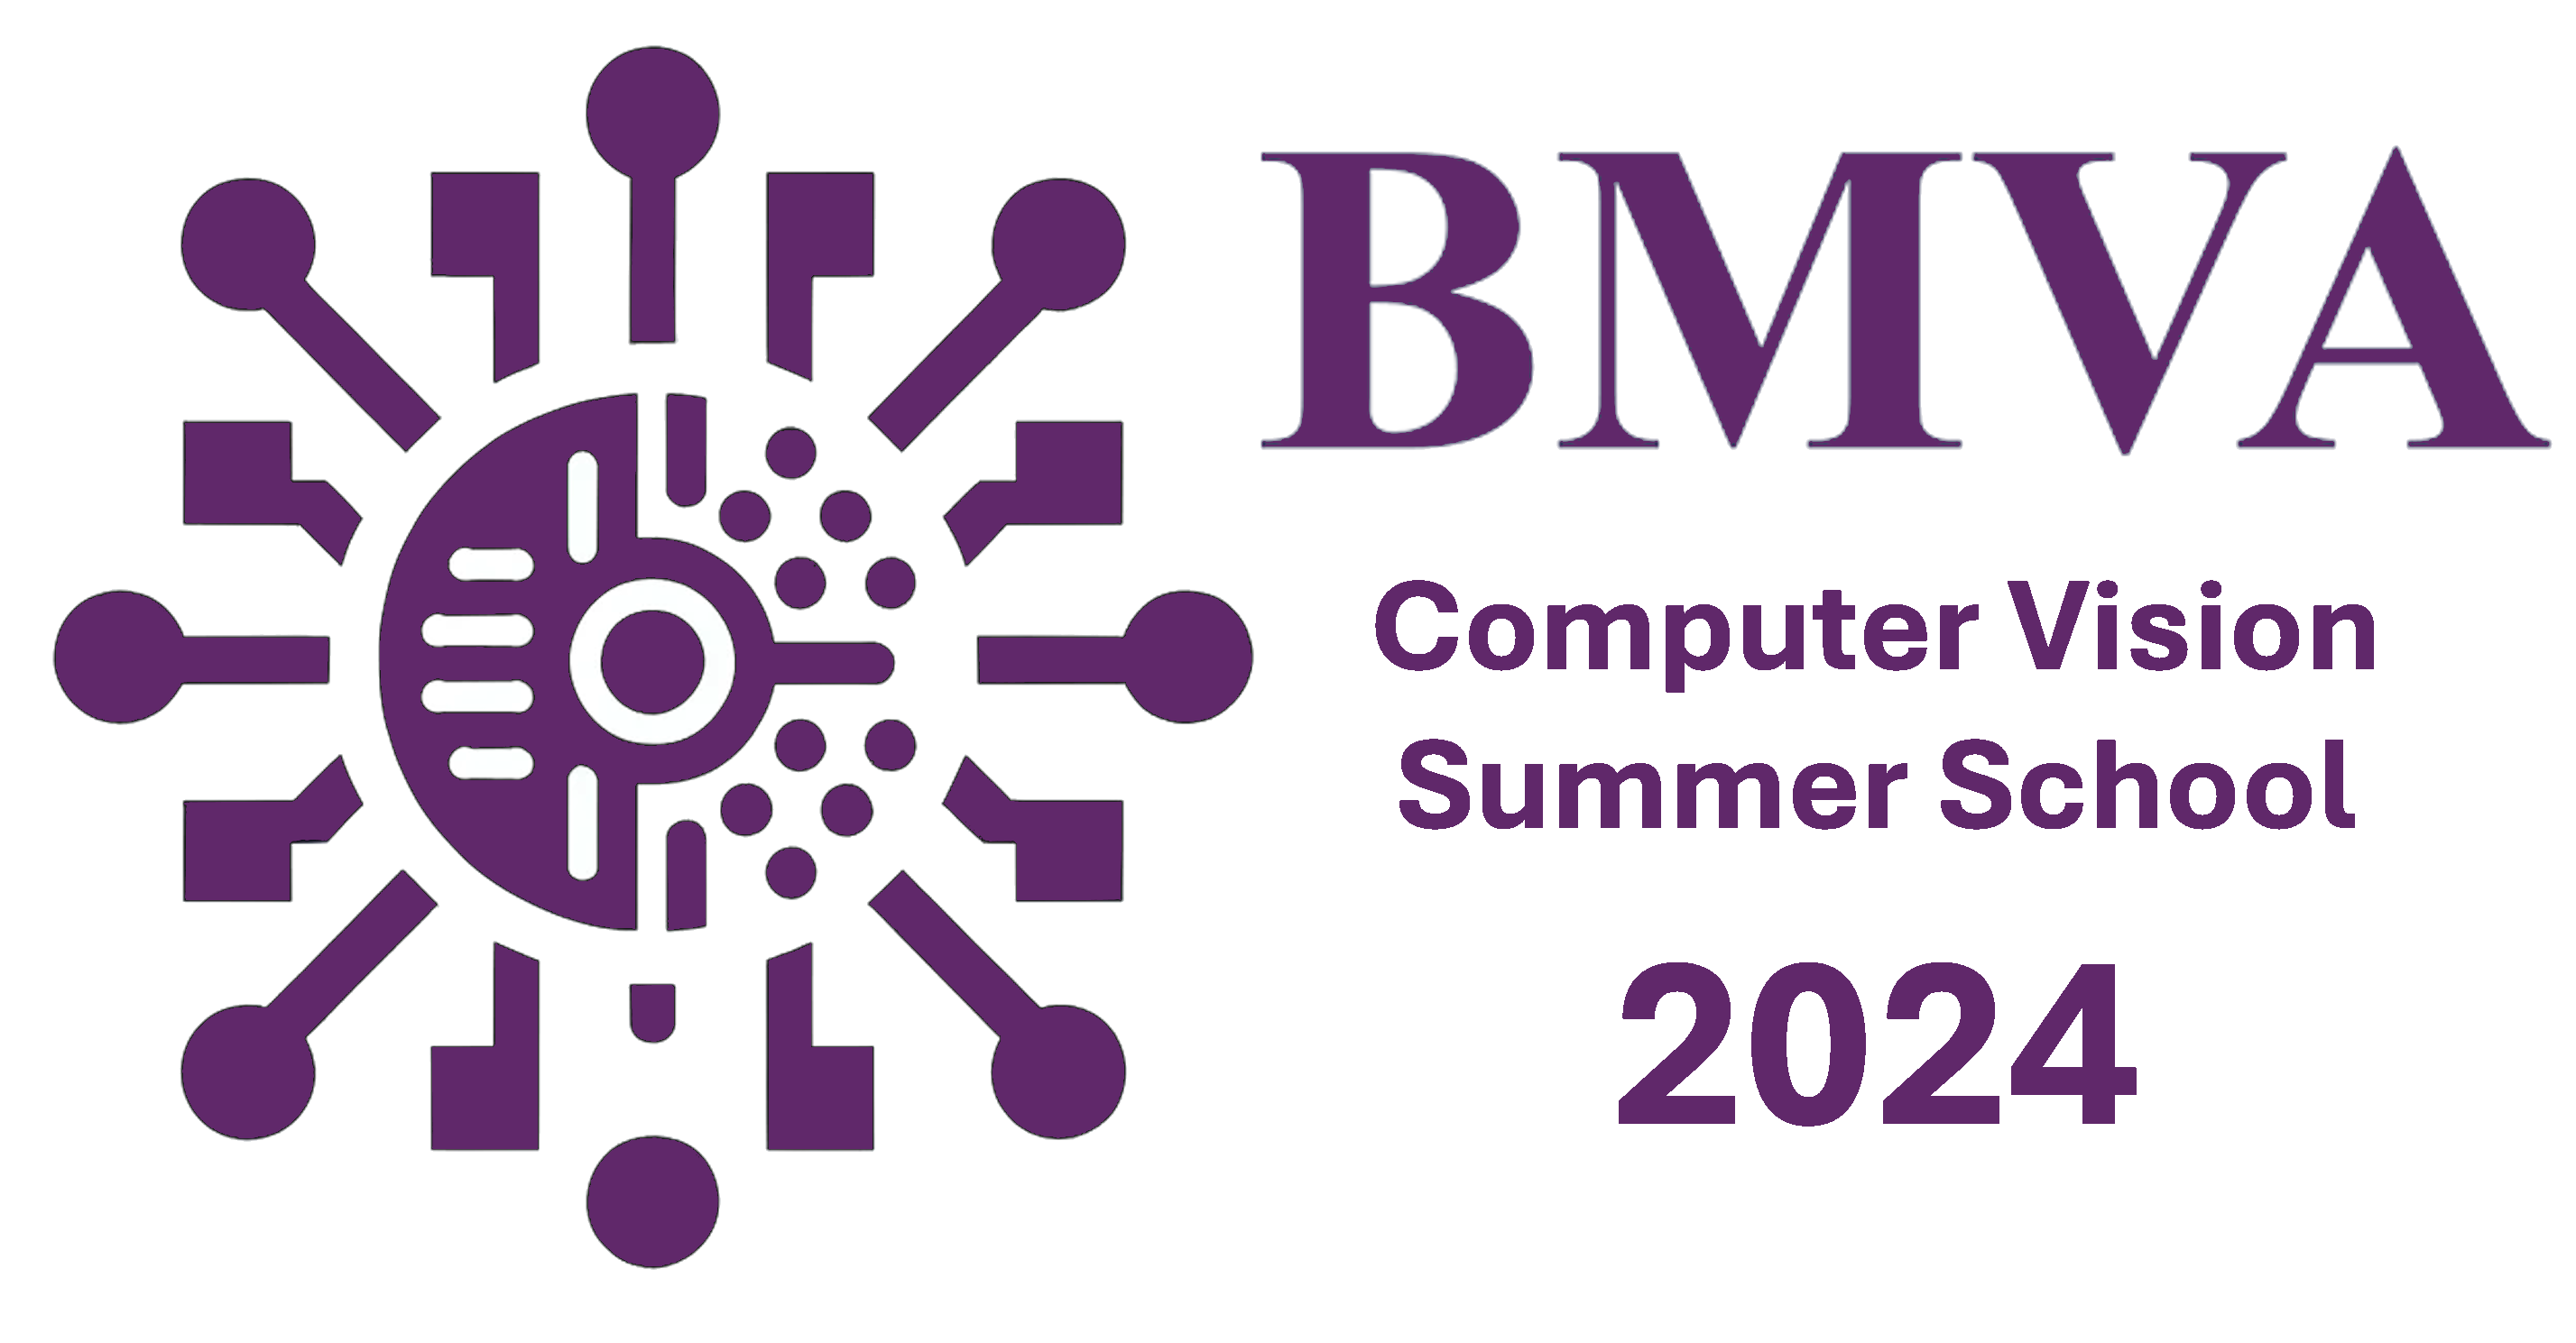 BMVC 2020 Logo